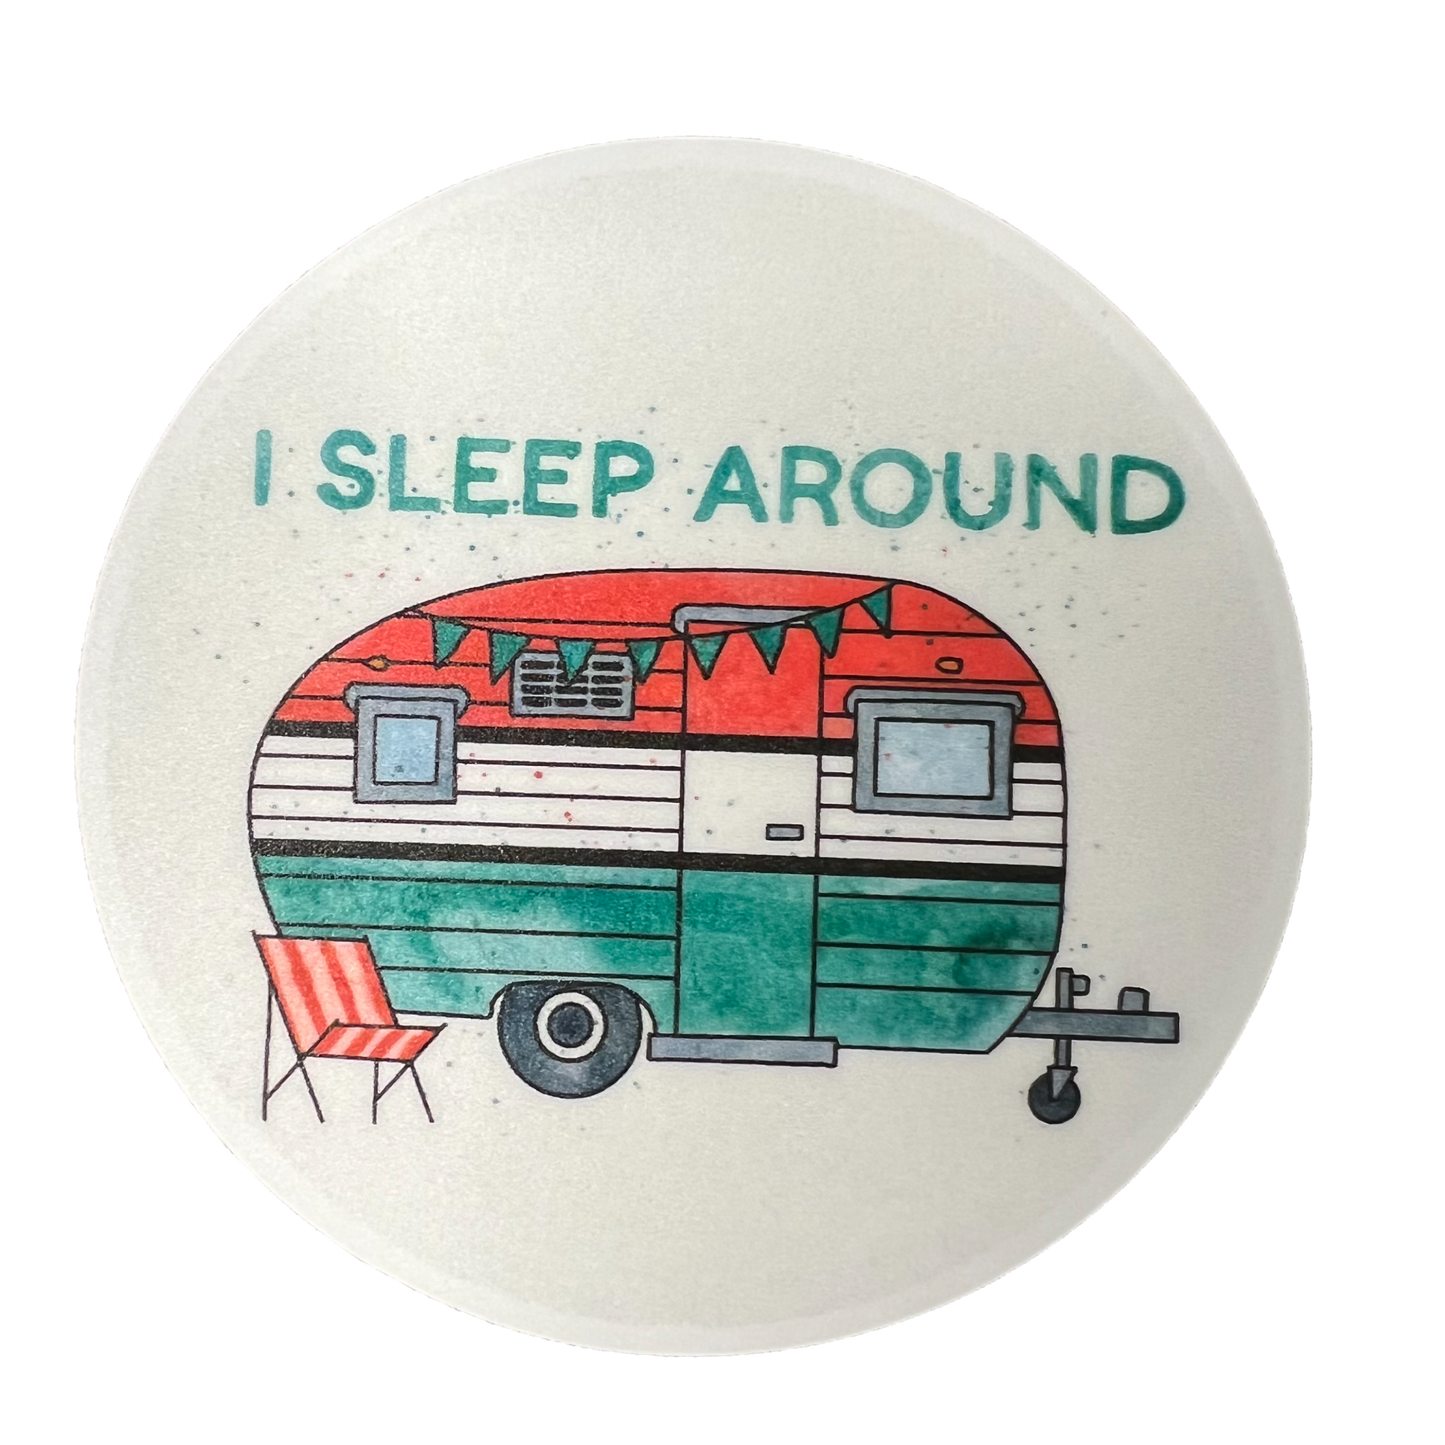 I Sleep Around Sticker